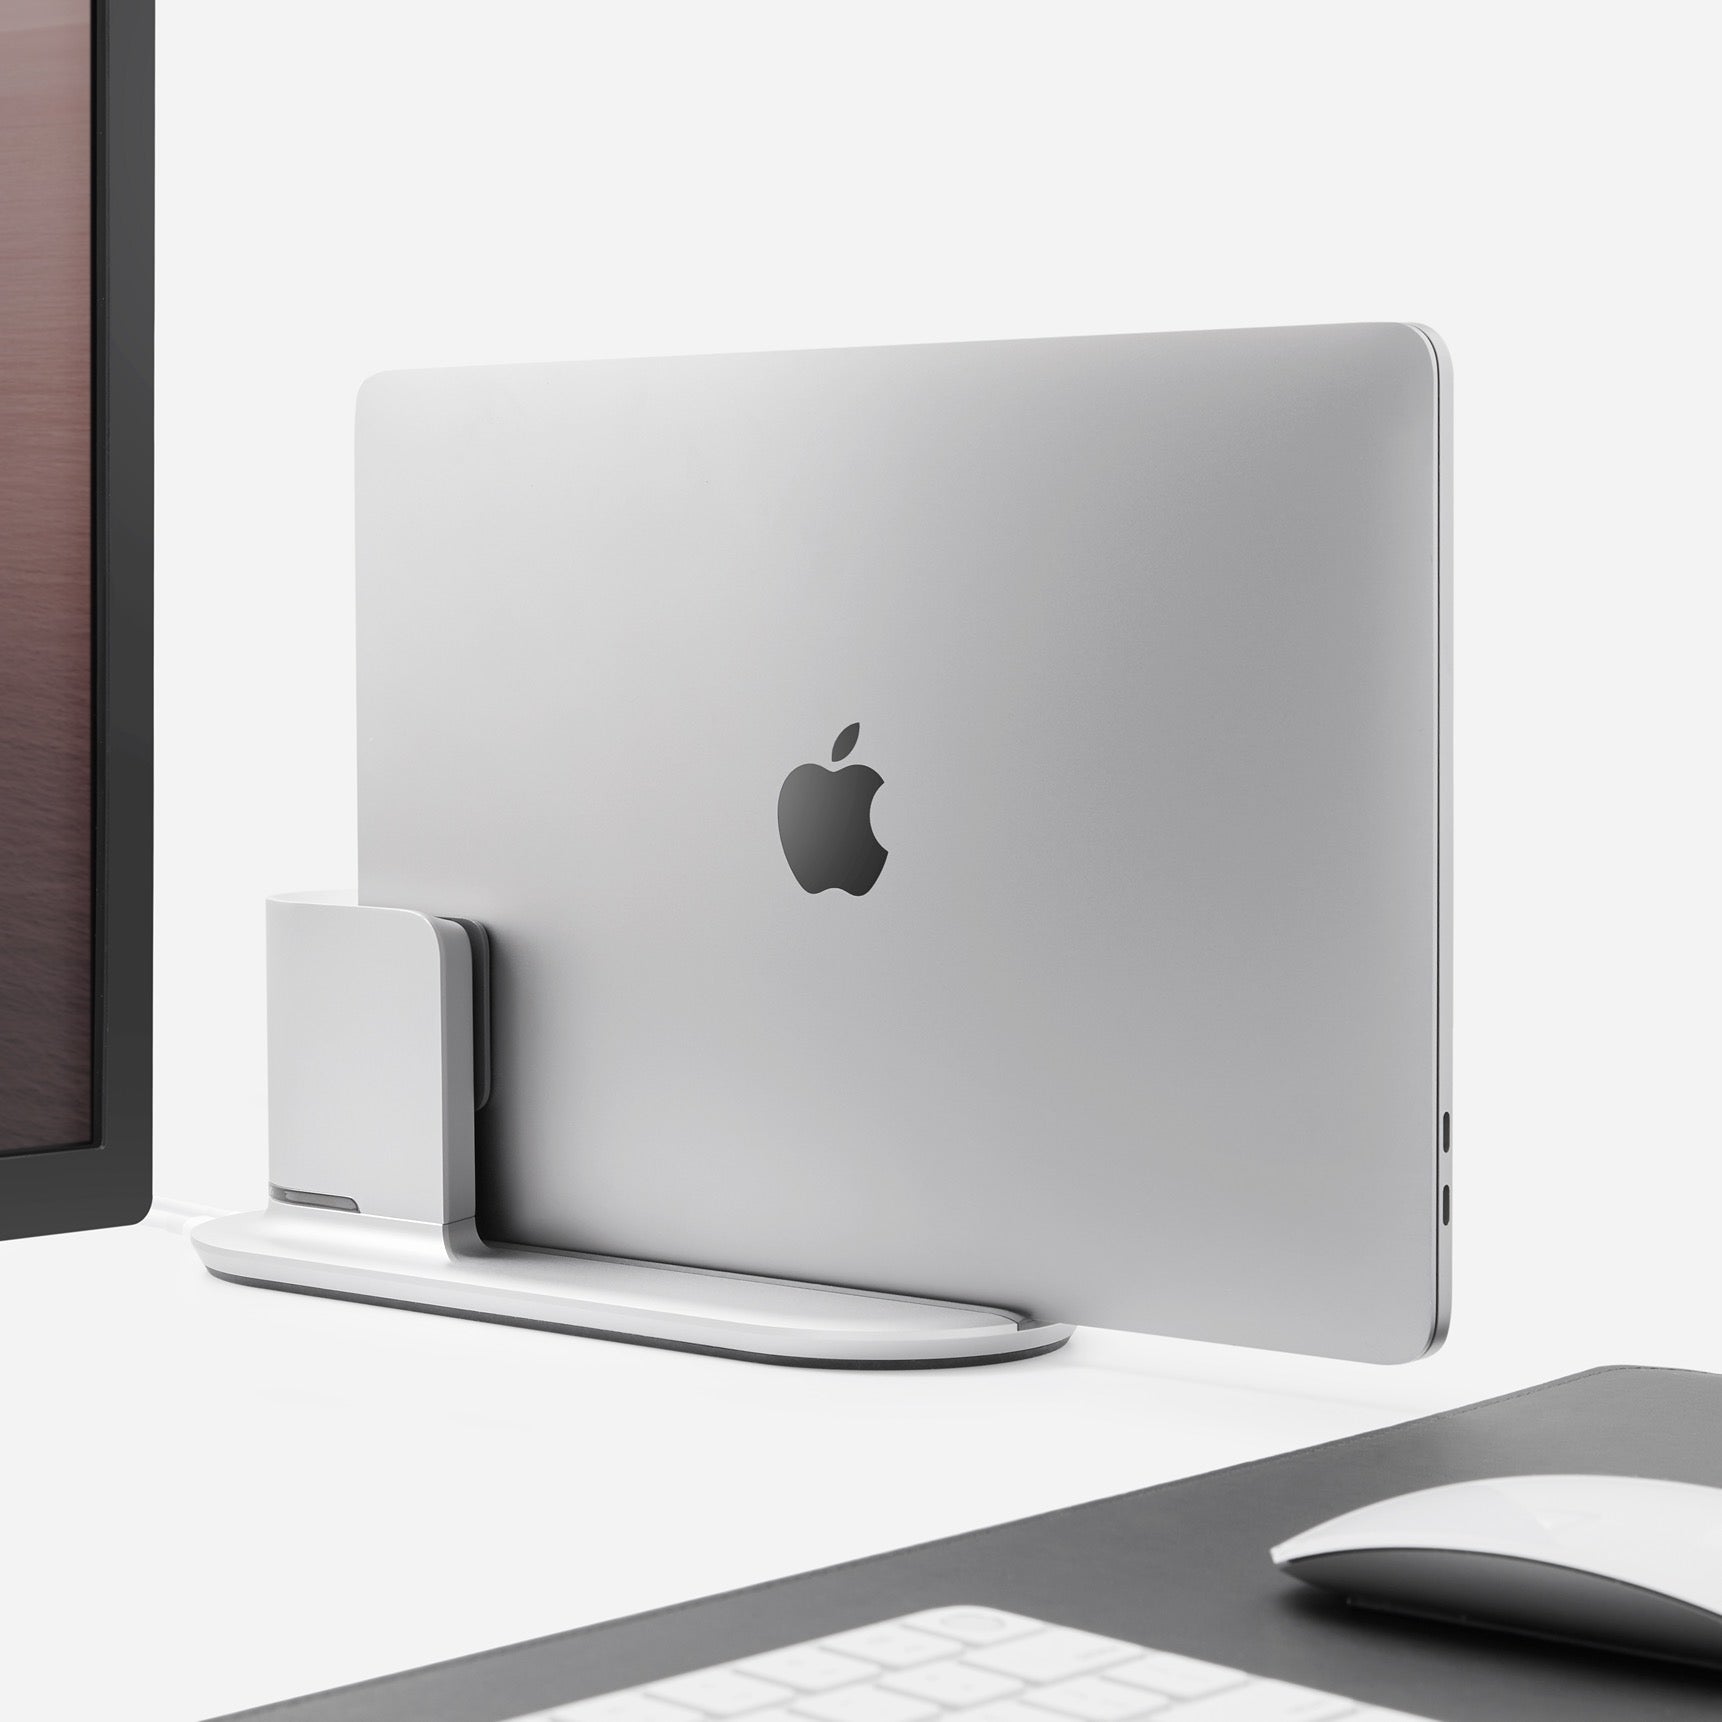 Henge: A Slide-in Docking-Station for Your MacBook